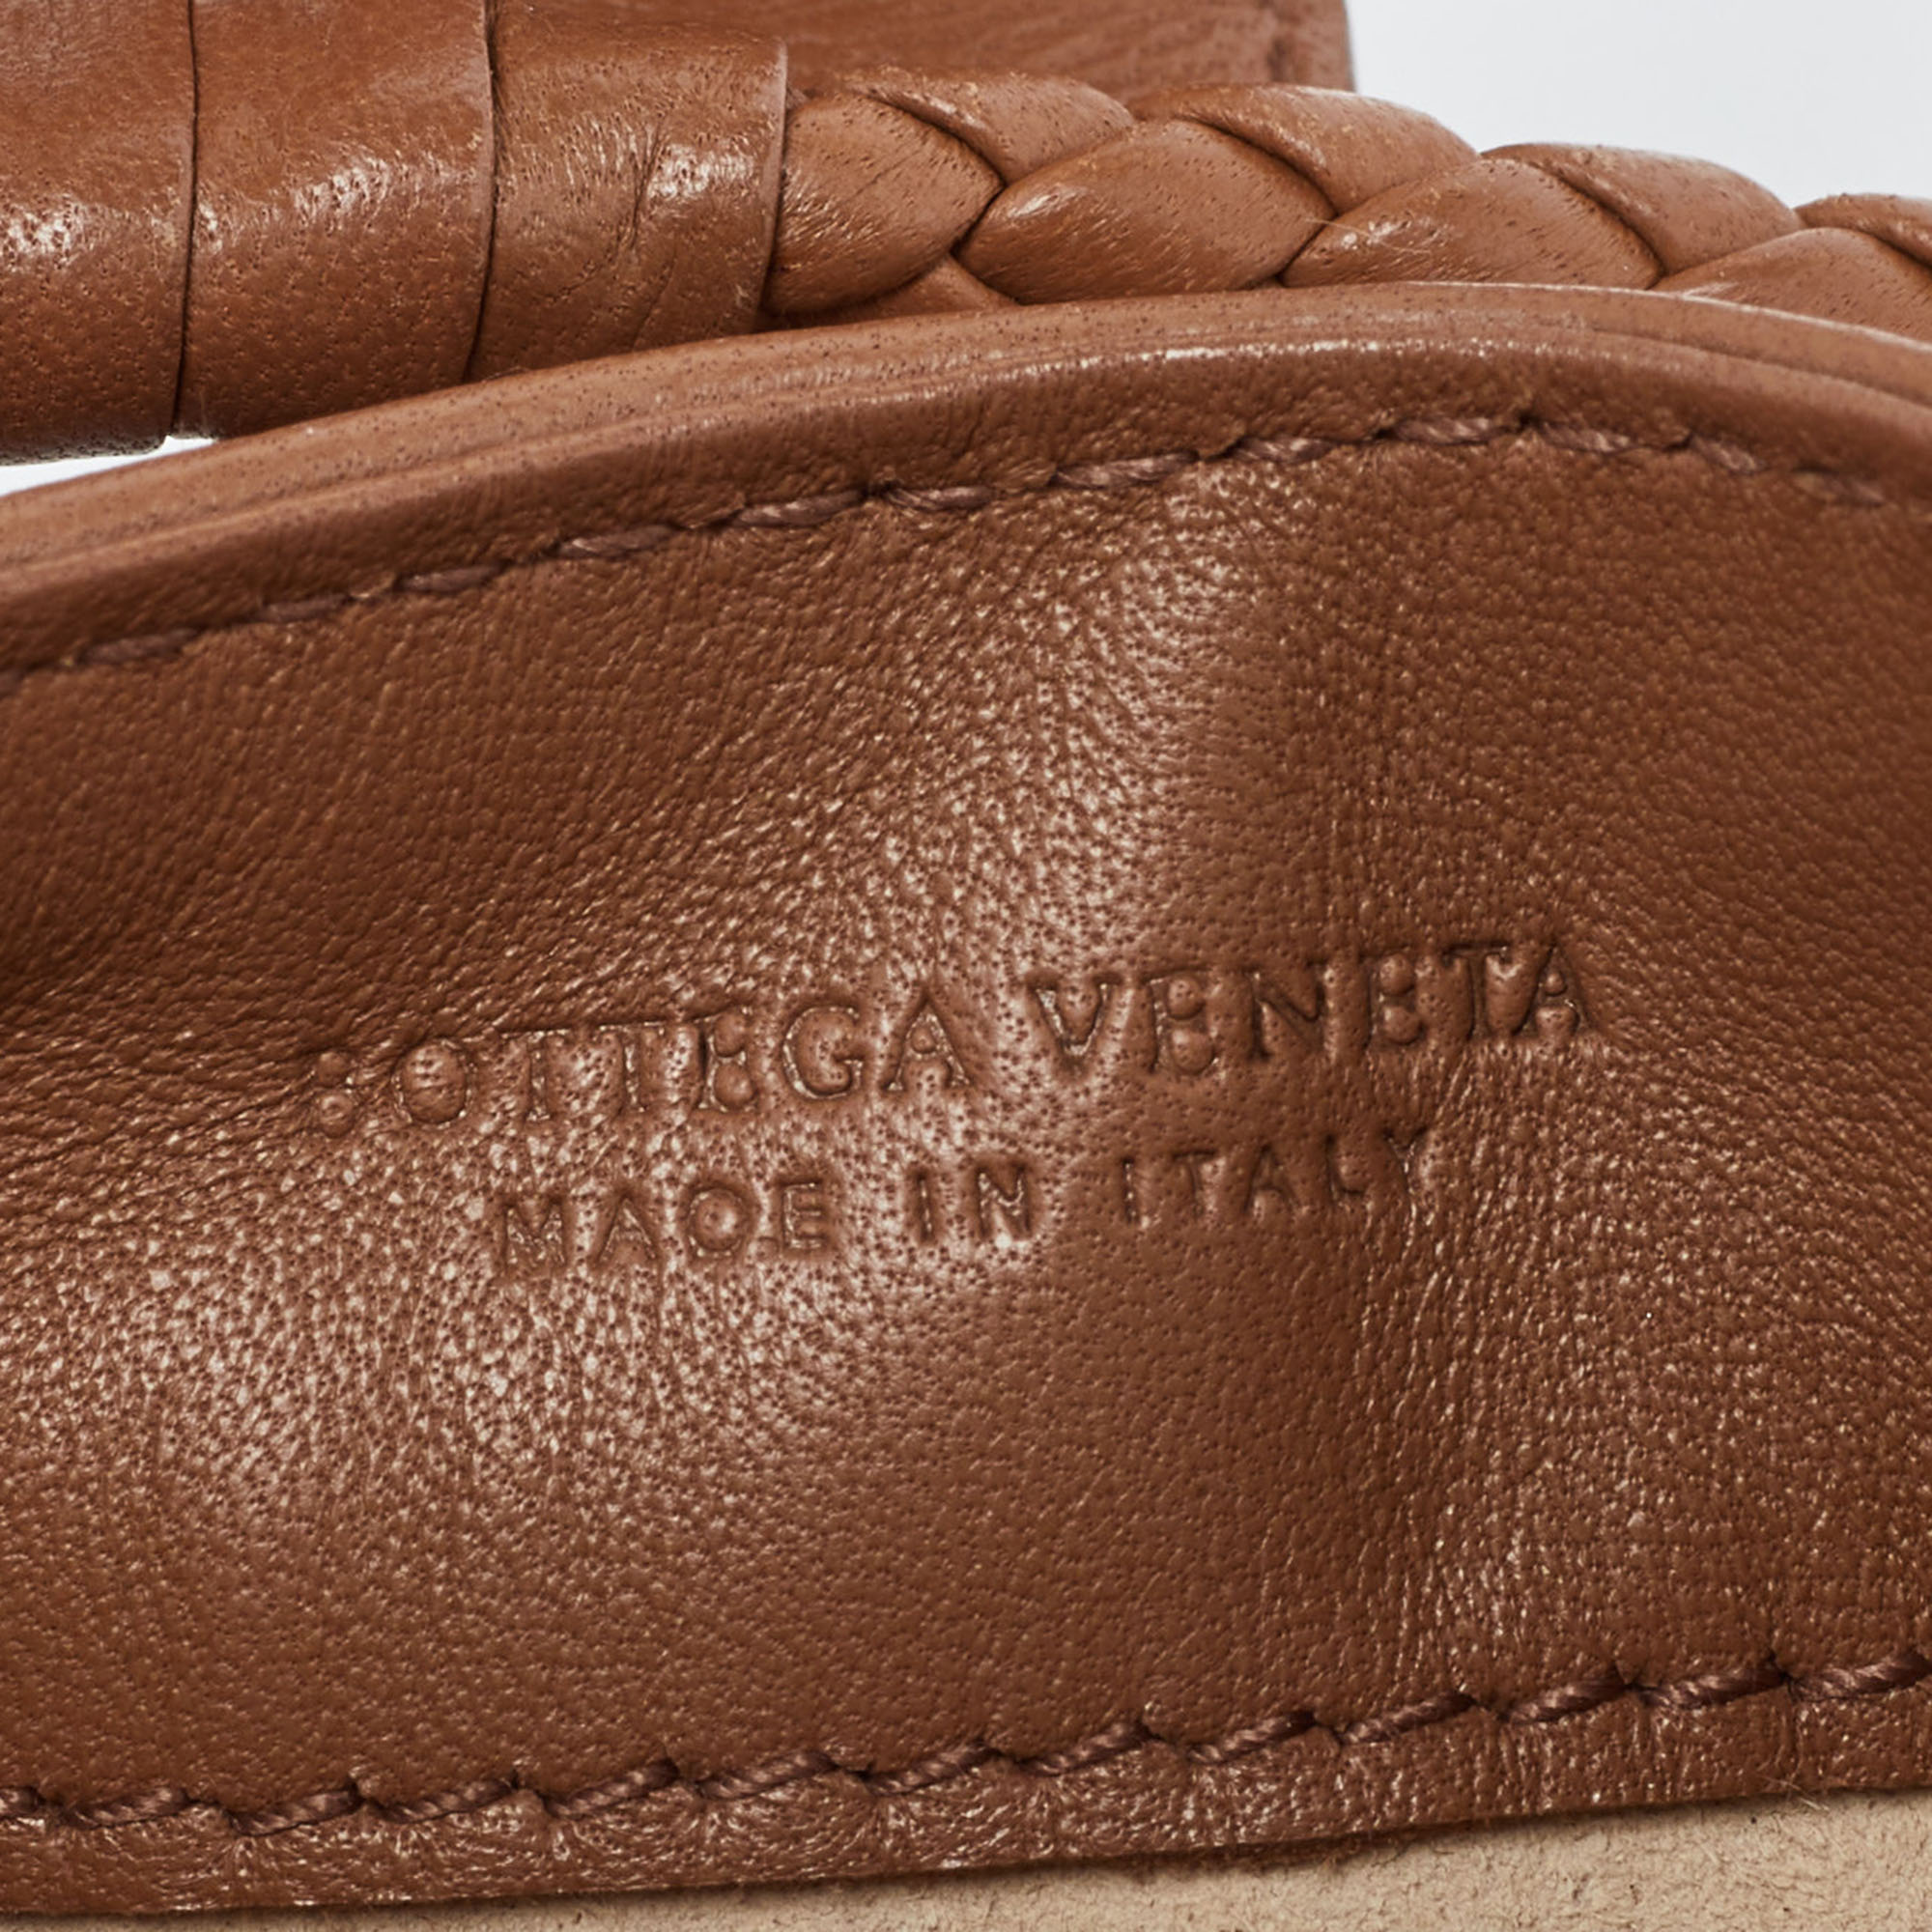 Bottega Veneta Brown Intrecciato Leather Phone Bag